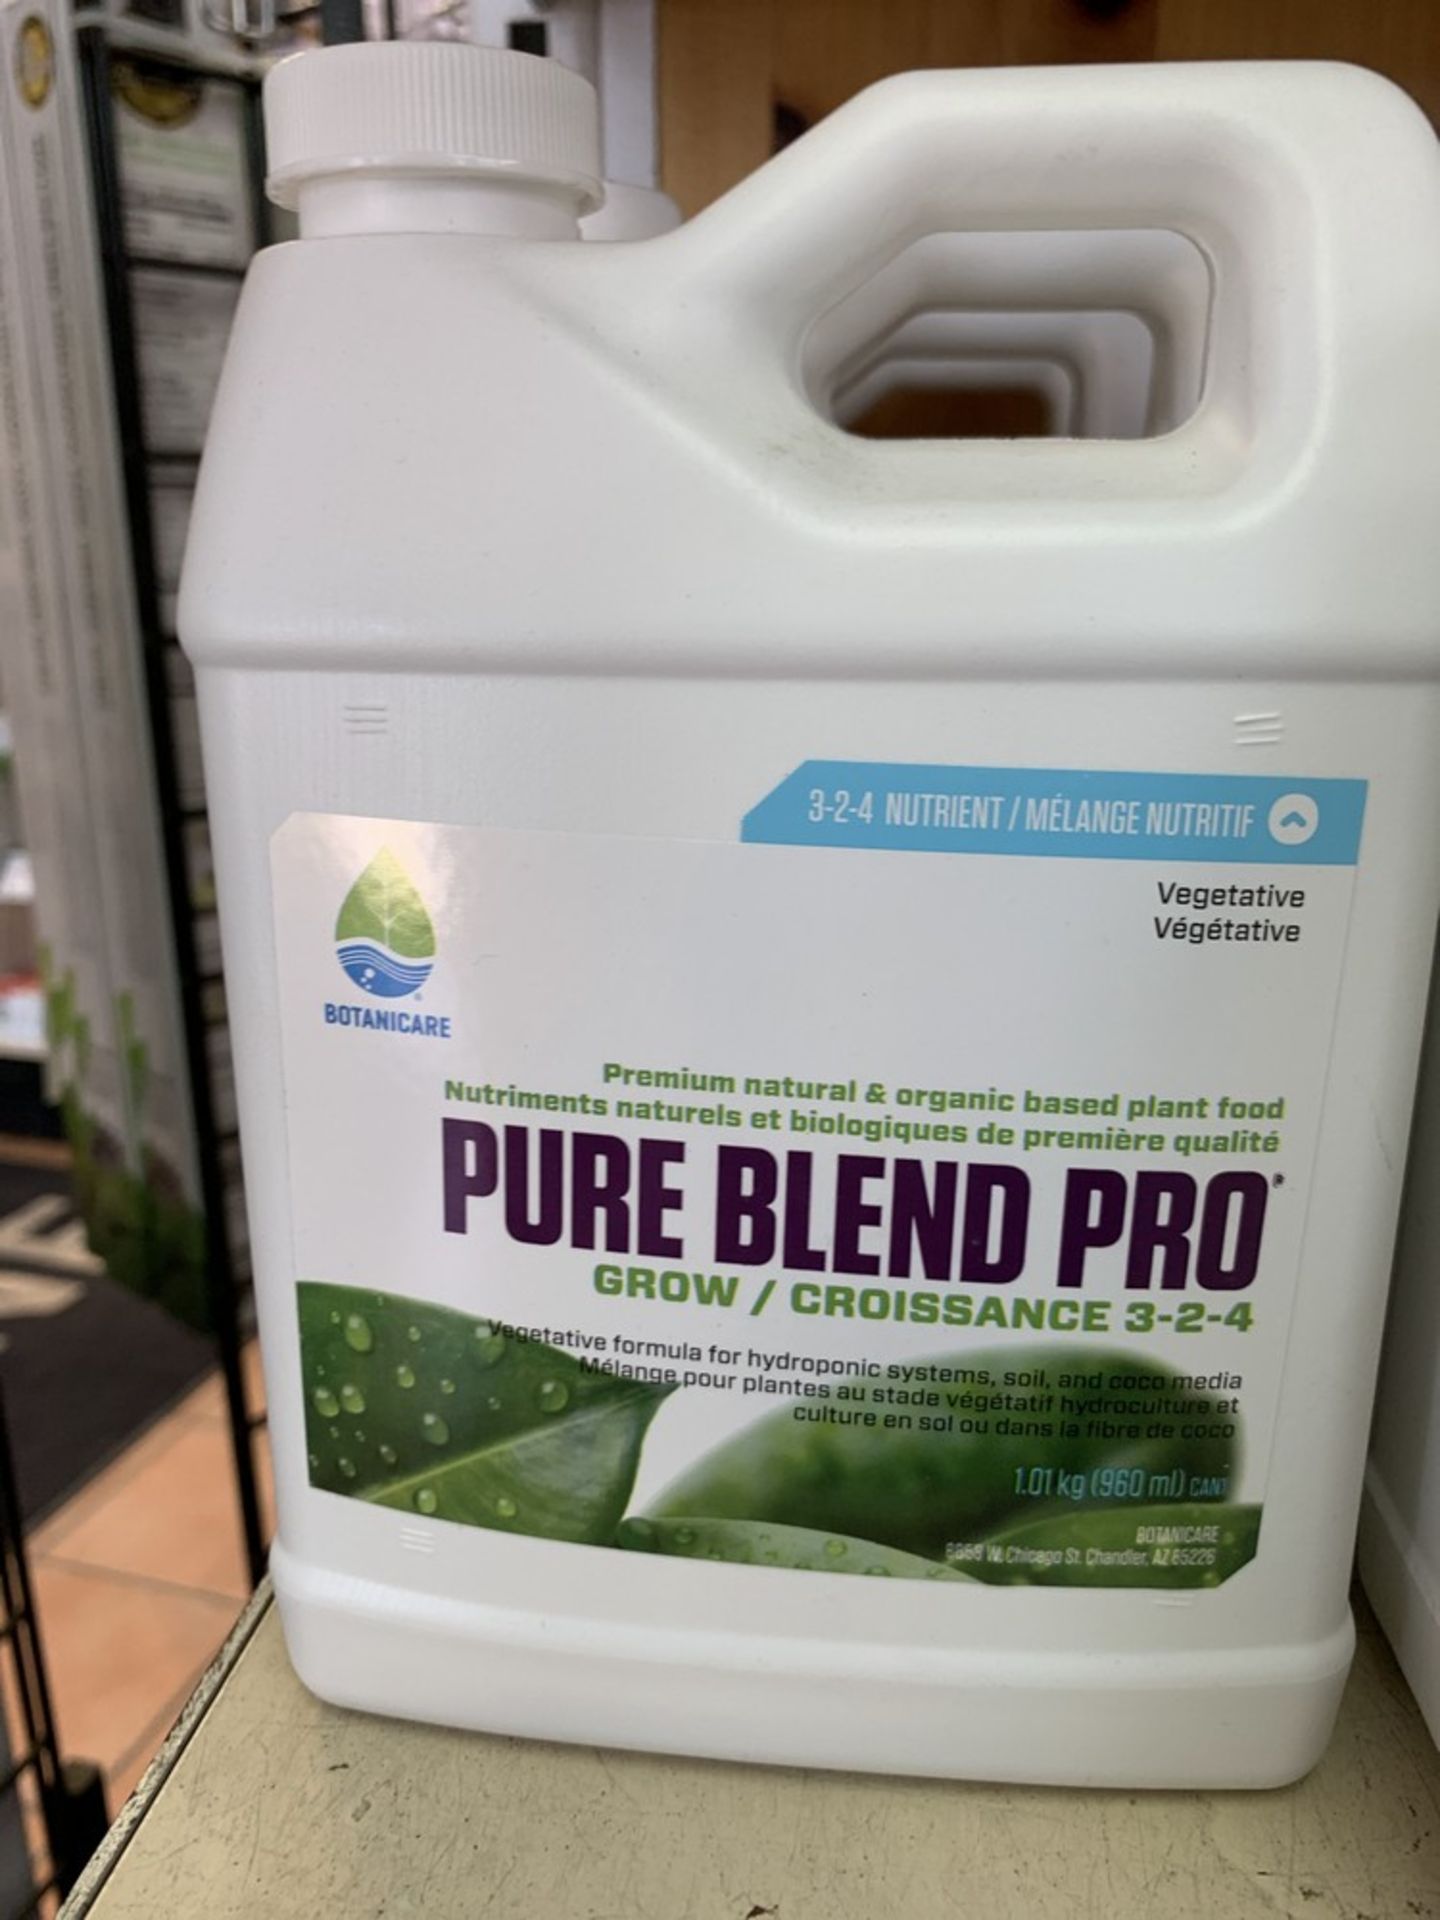 BOTANICARE Pure blend Pro - plant food